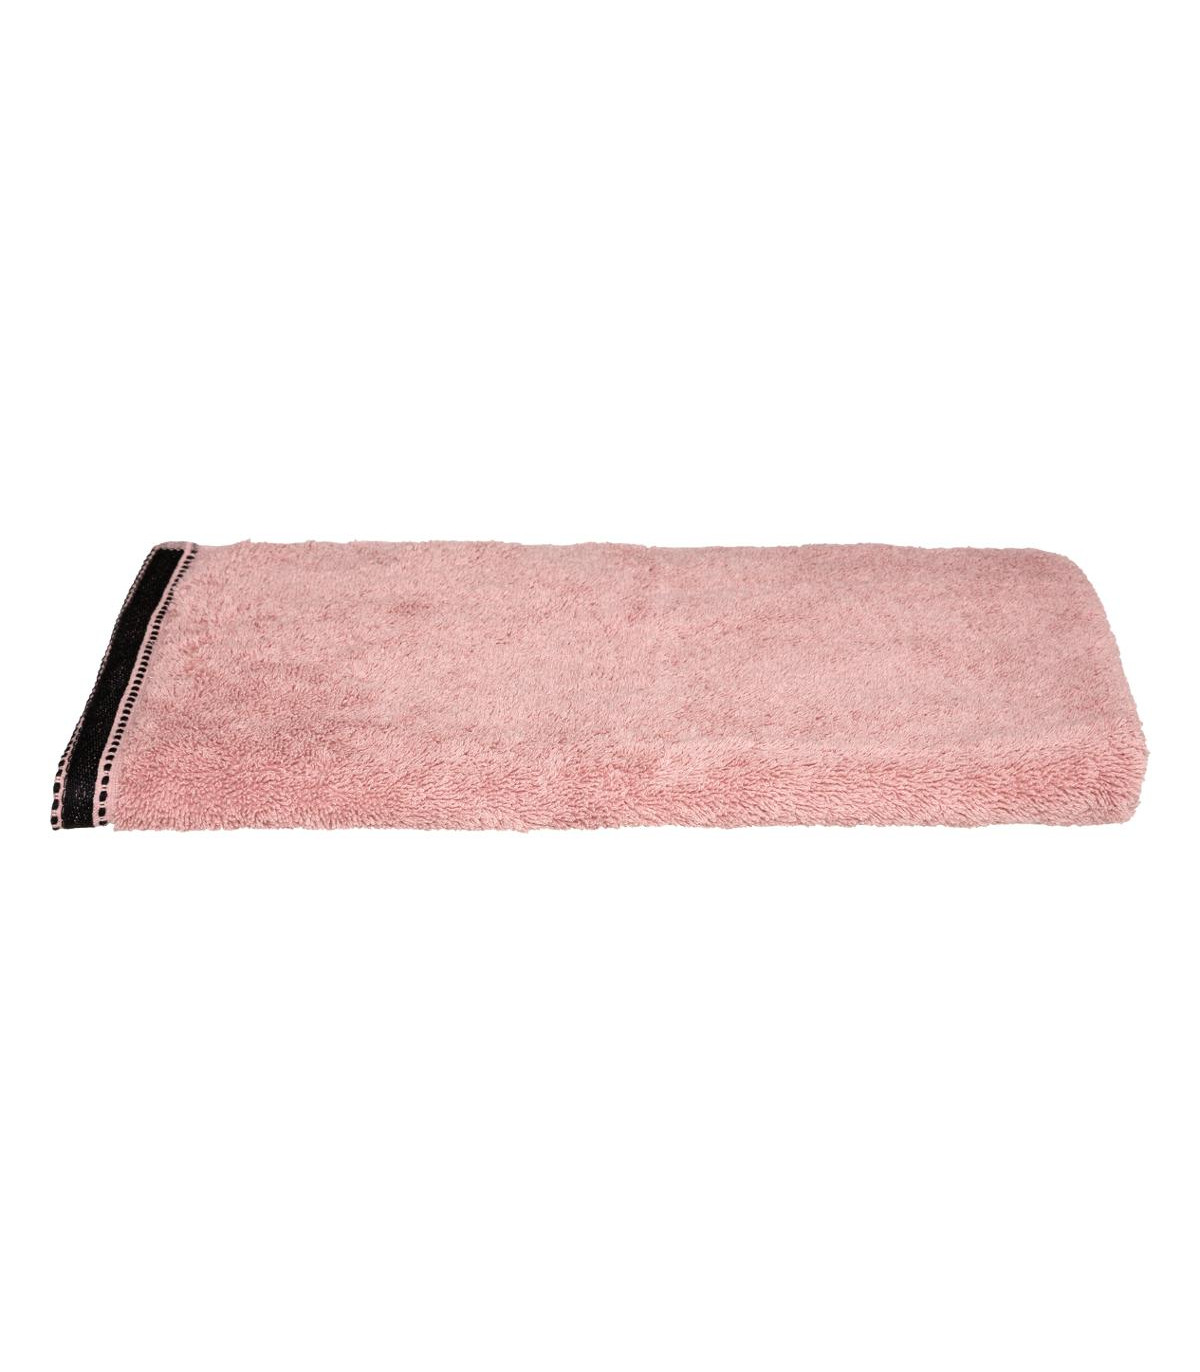 serviette-de-toilette-joia-rose-tissu-eponge-50-x-90-cm